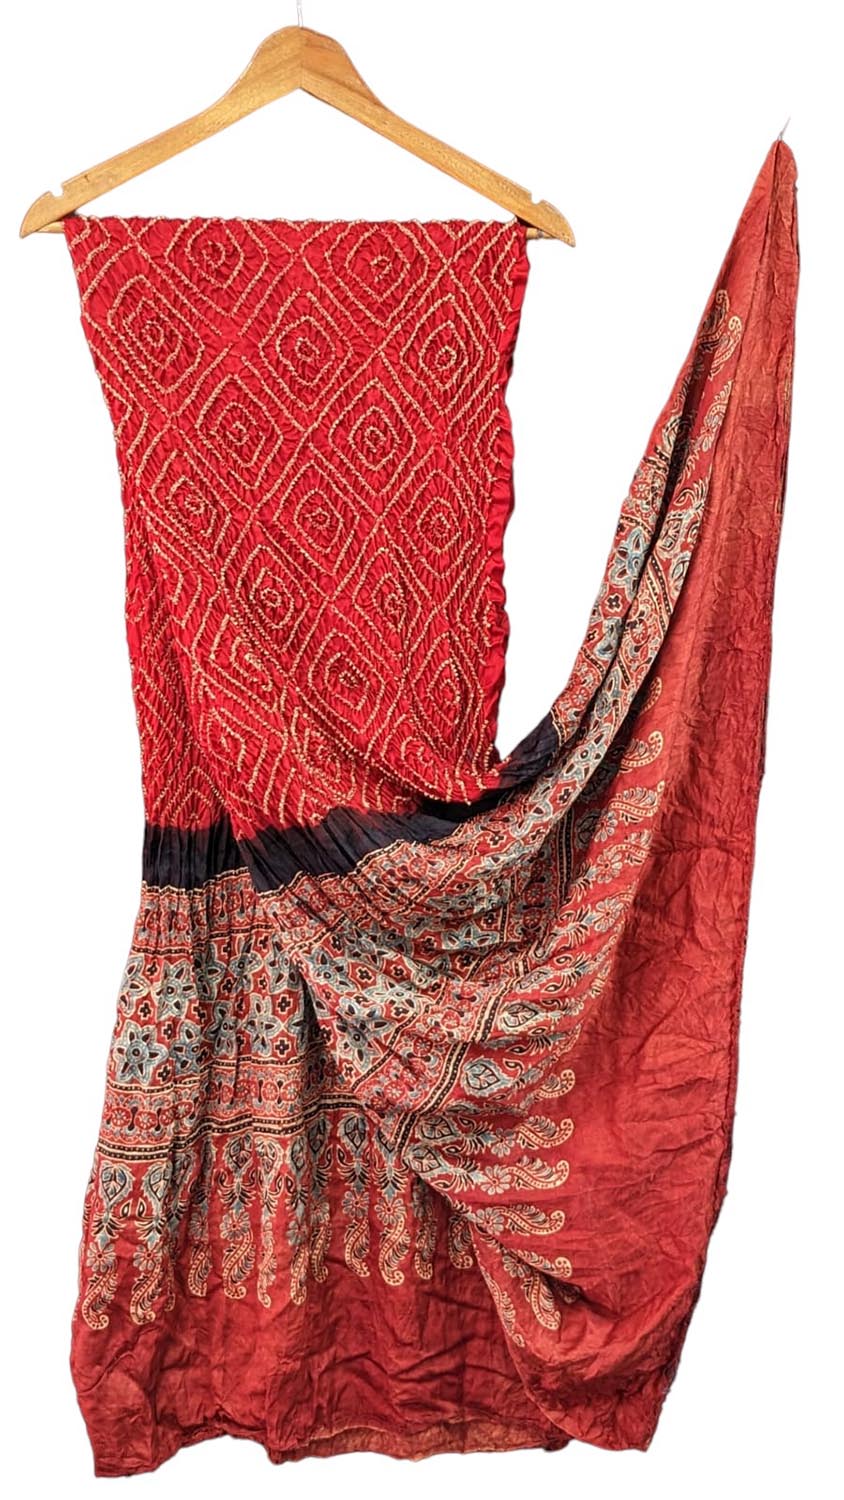 Shop Handcrafted Red Ajrakh Bandhani Gajji Silk Dupatta - Ethnic Fashion Accessory Now - Luxurion World